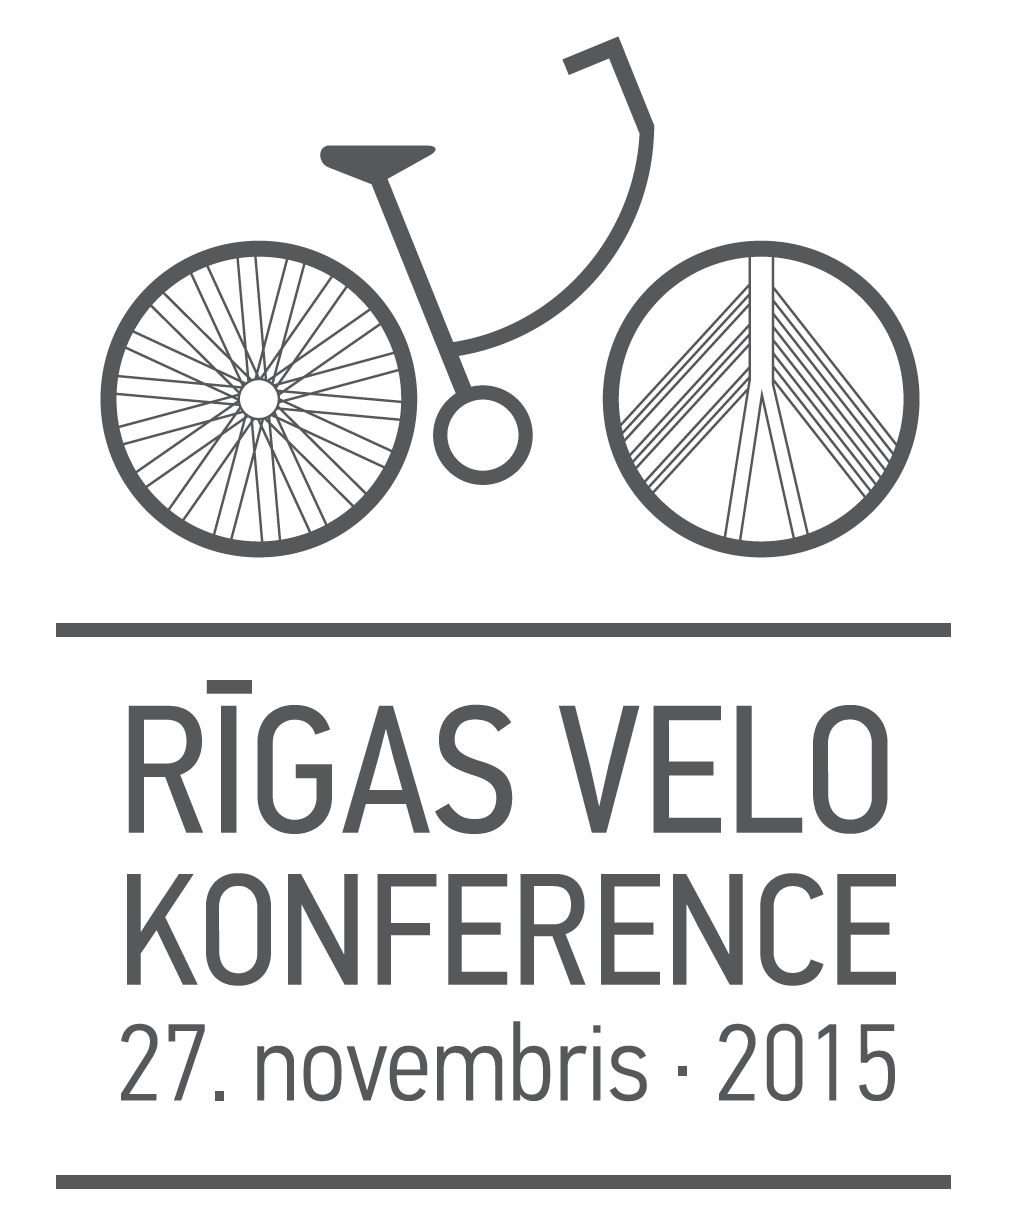 Rīgas velo konferences logo